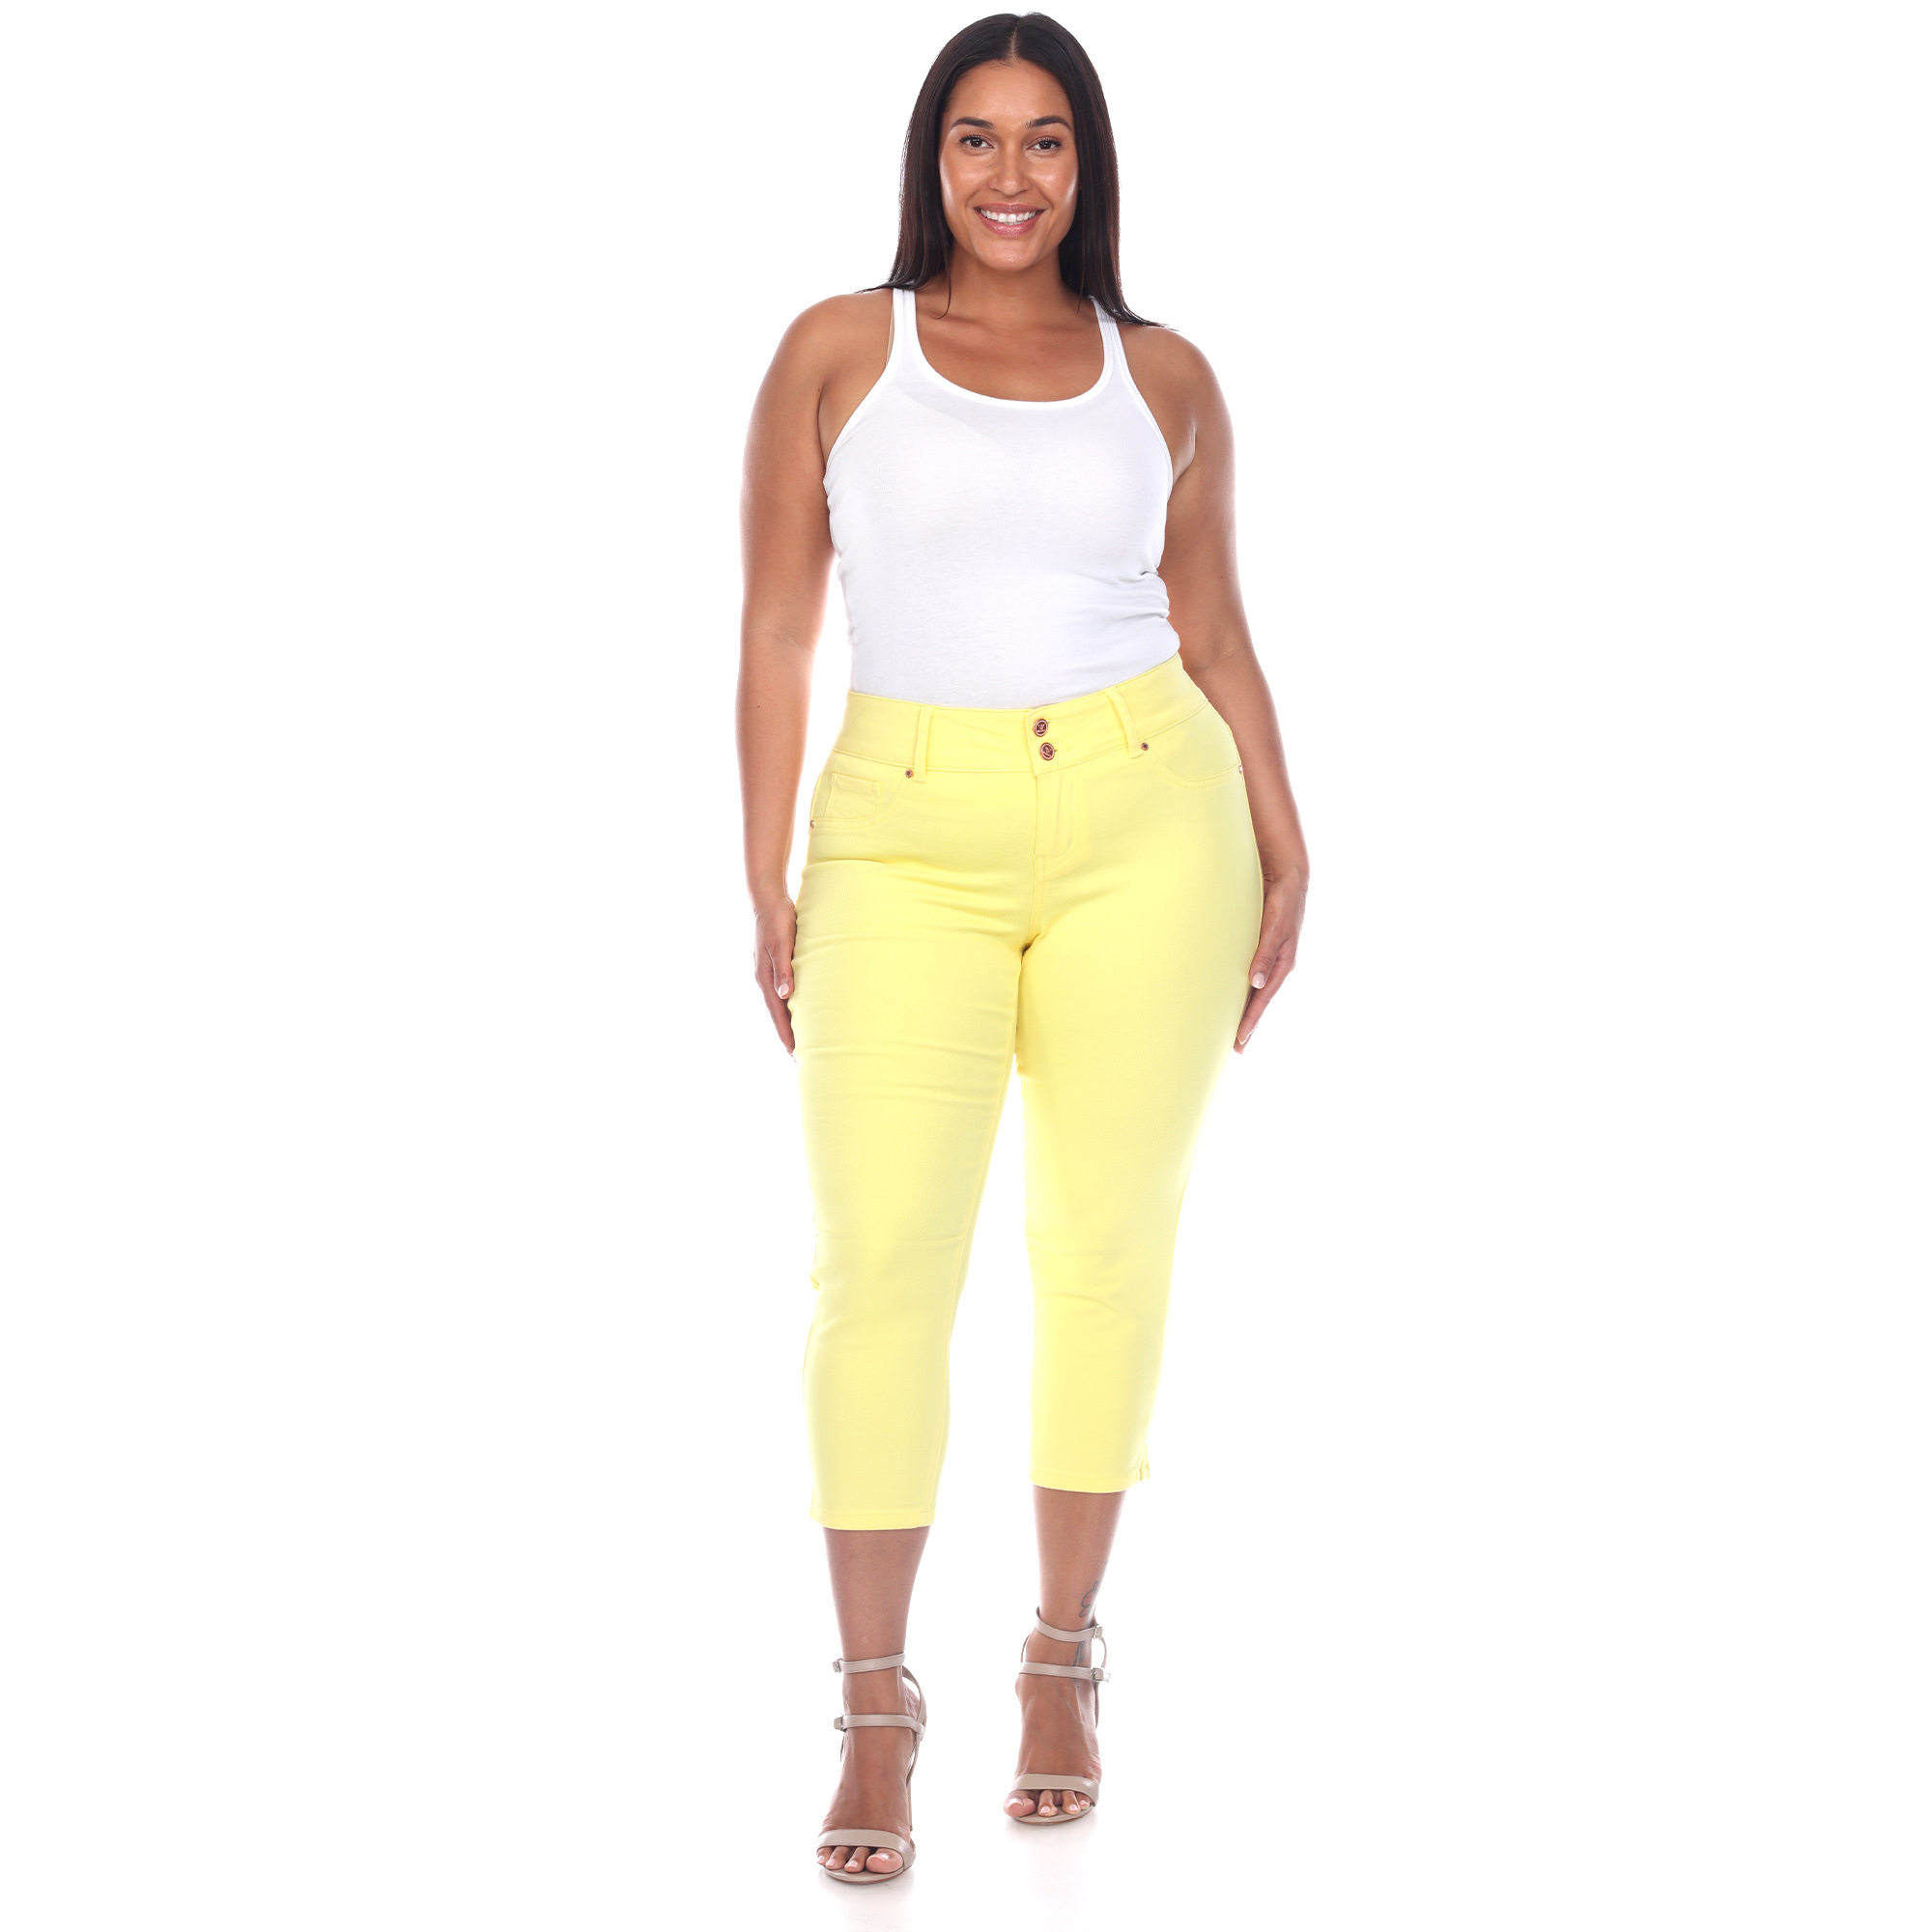 White Mark Womenâs Capri Jeans - Yellow, 20